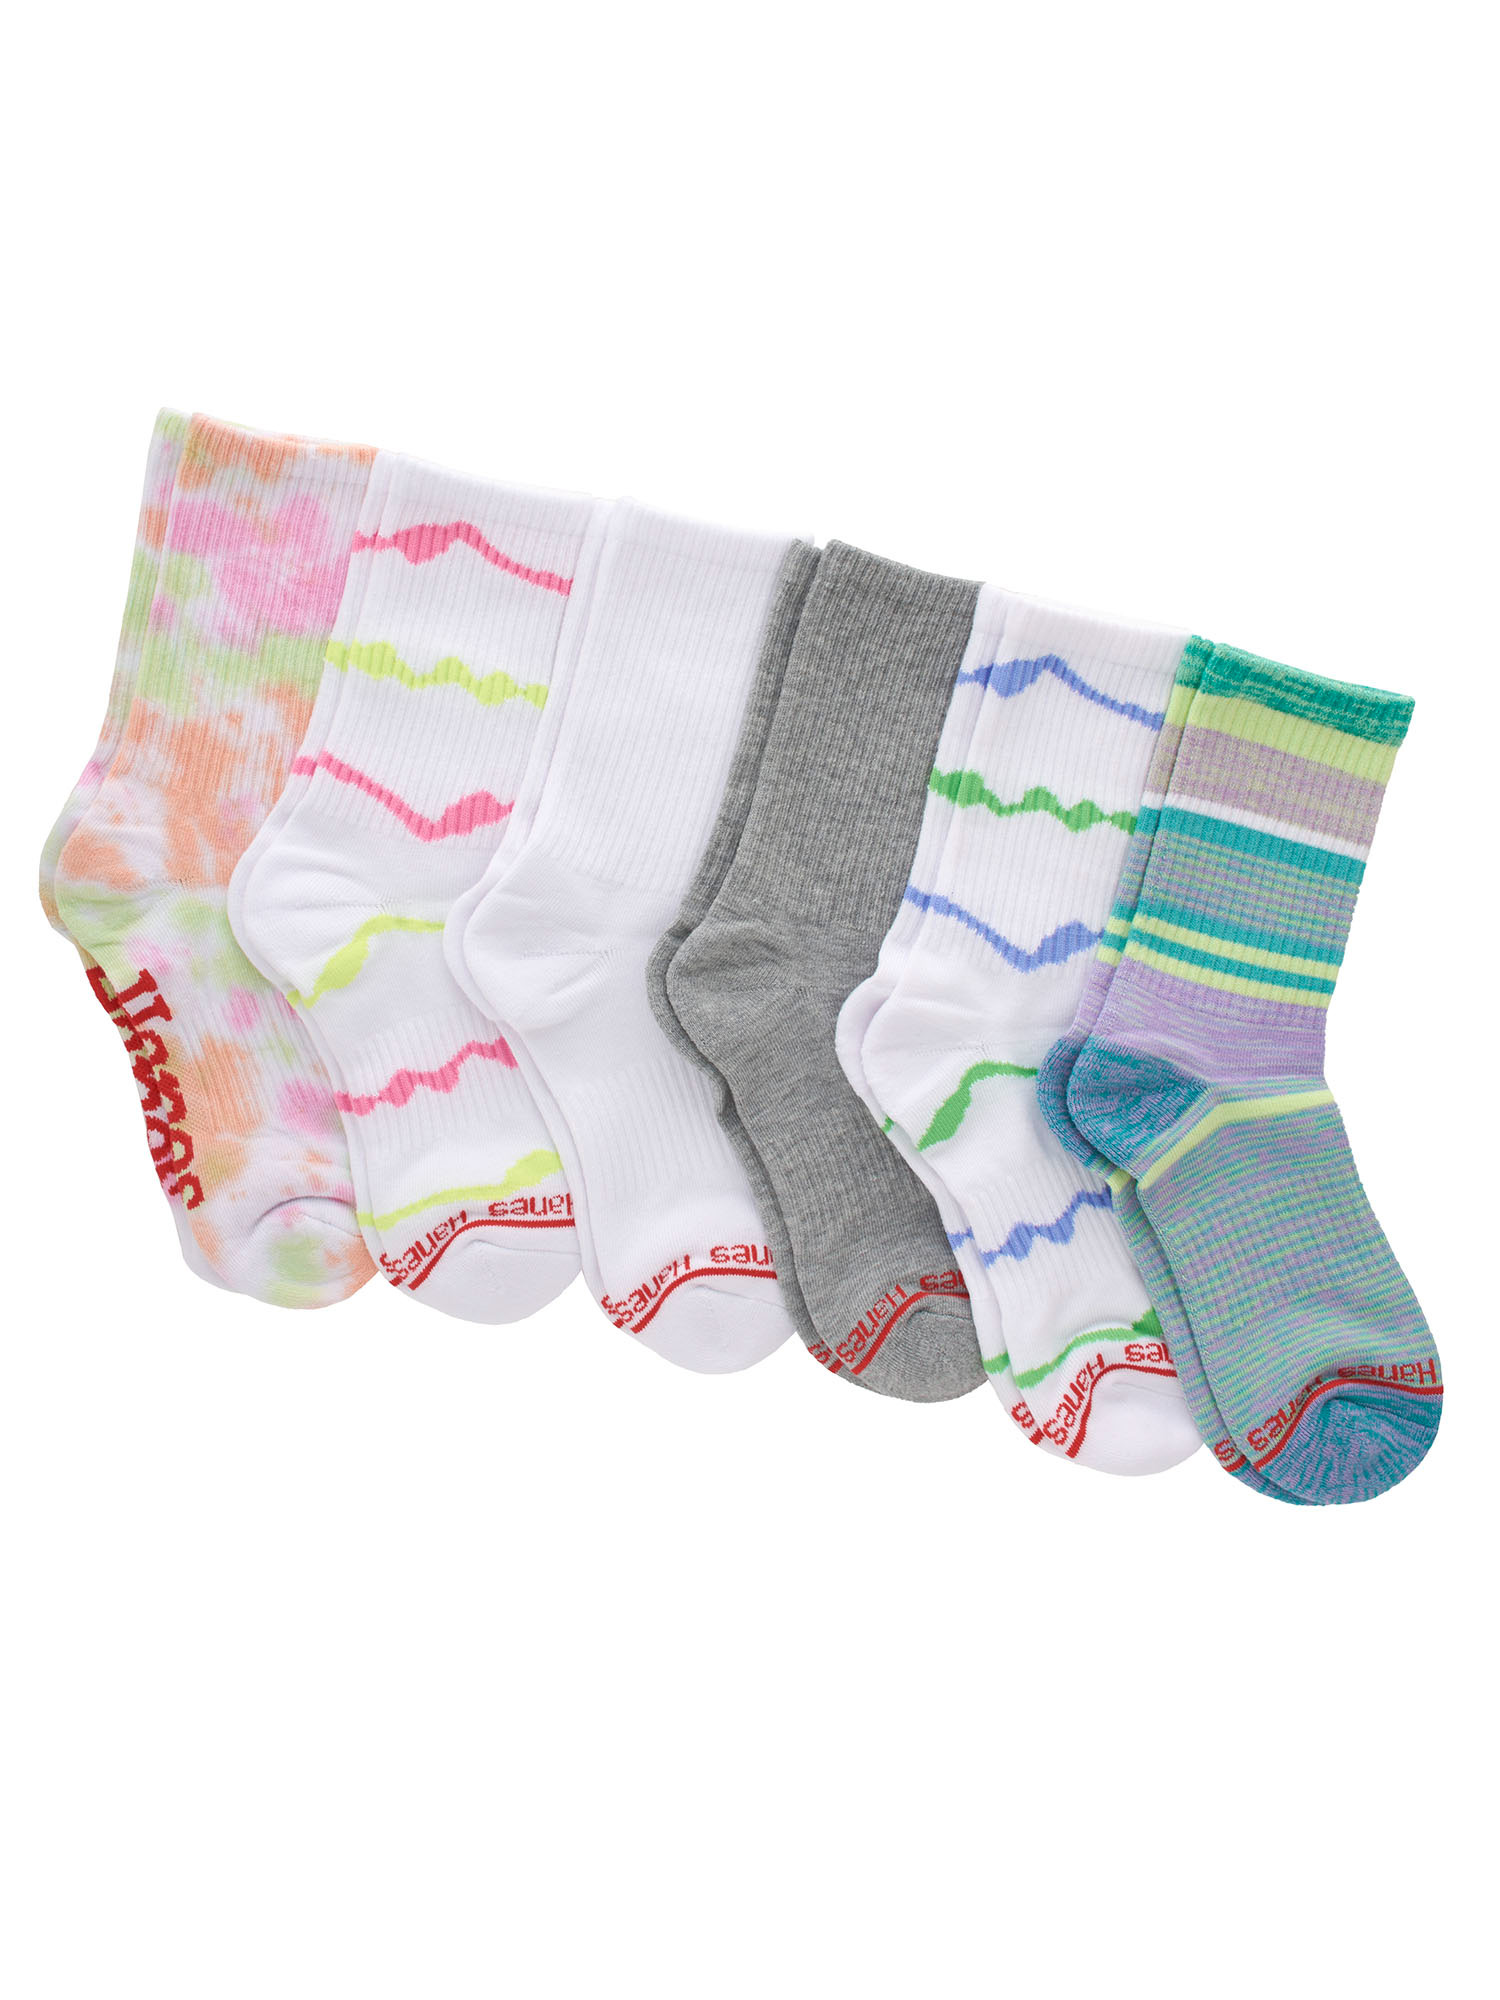 Hanes Originals Girls' Crew Socks, 6-Pack, Sizes S-L